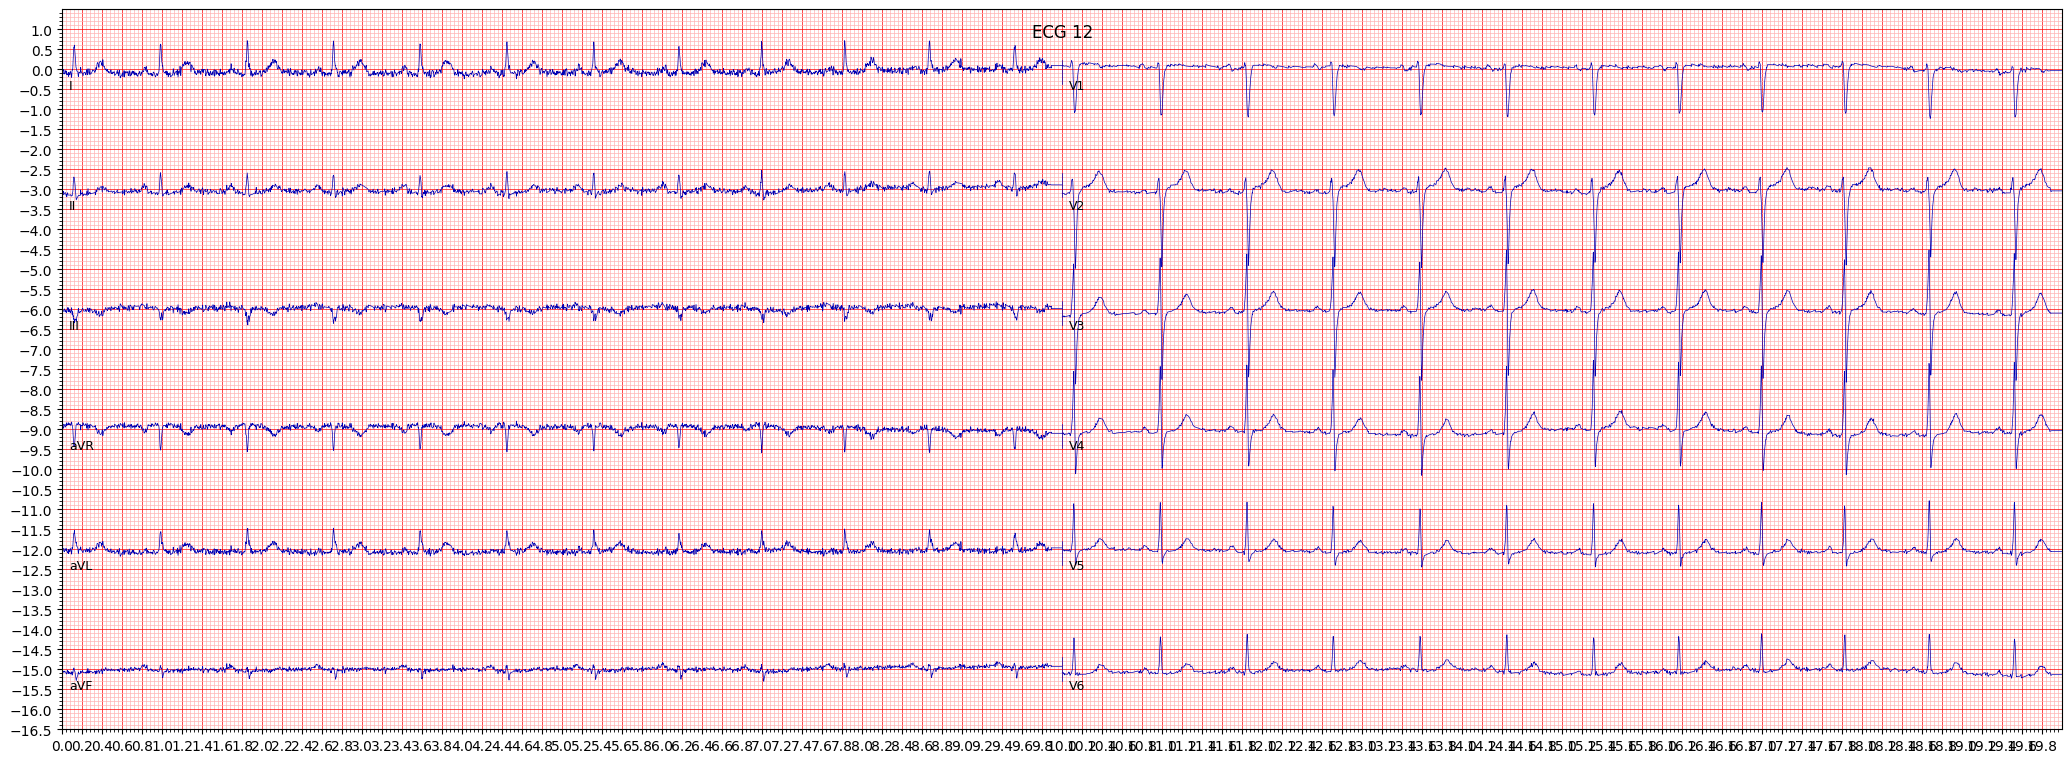 inferior myocardial infarction (IMI) example 290